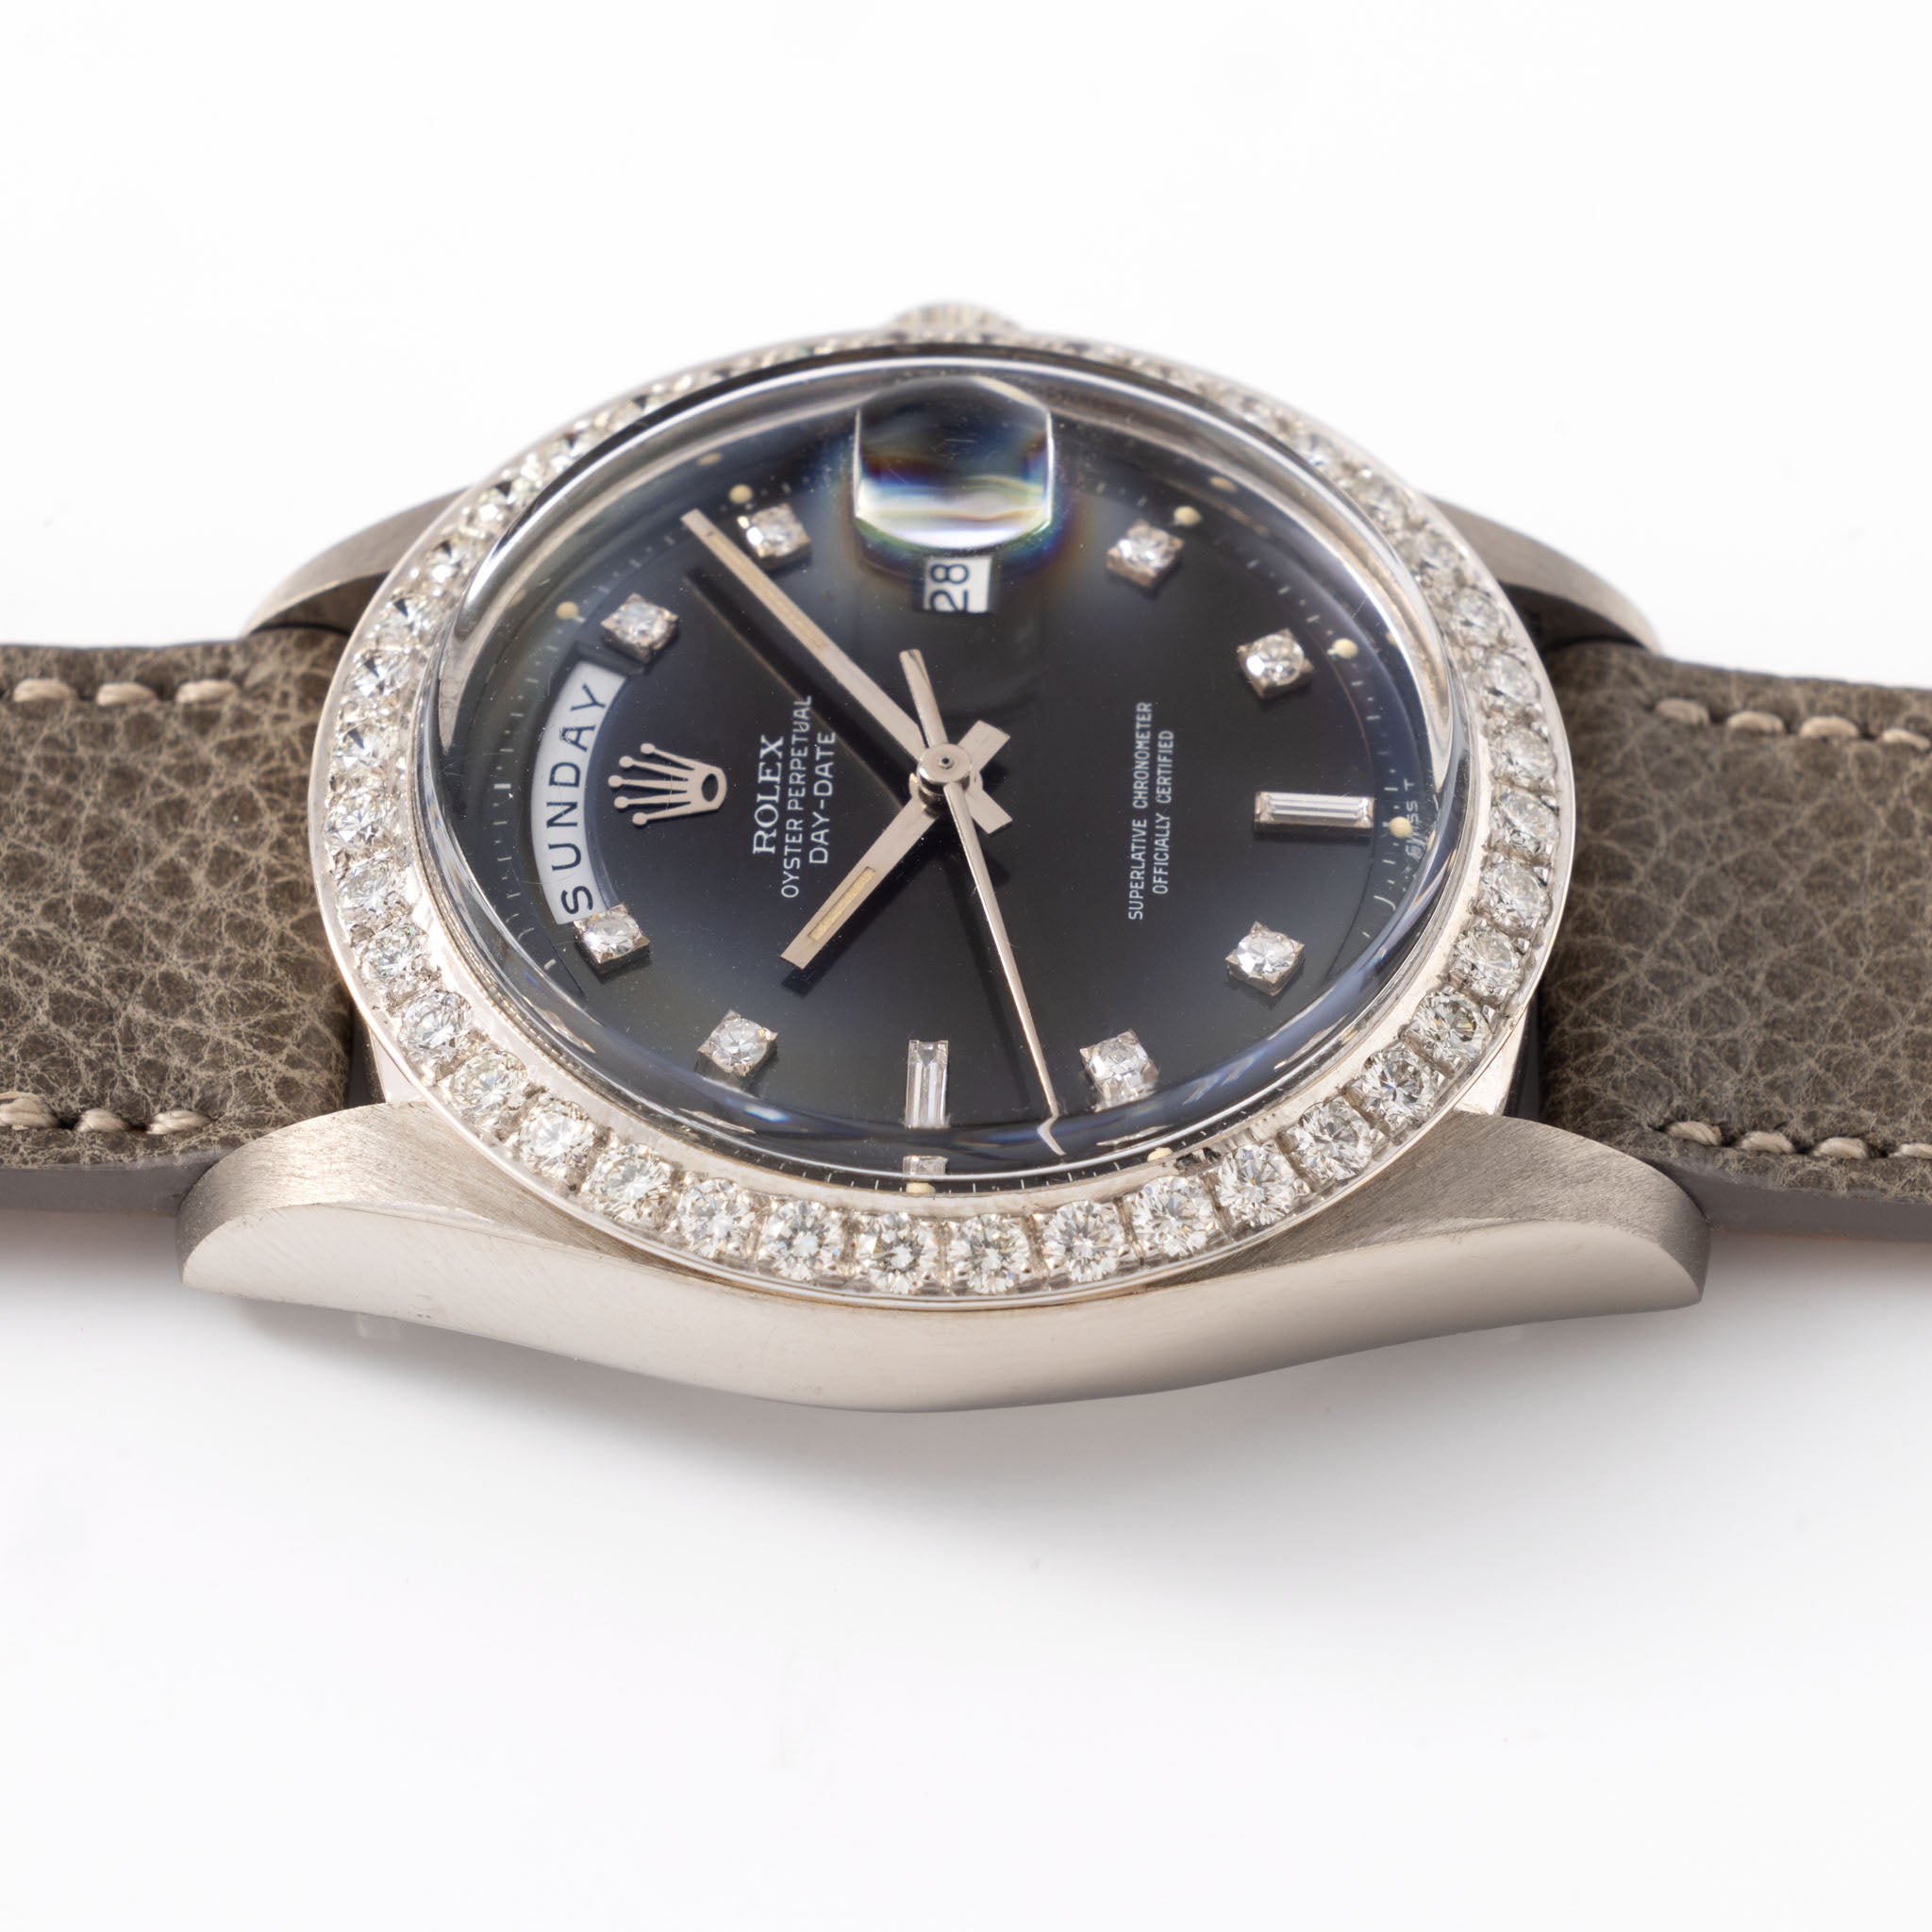 Rolex Day-date Grey dial diamond set in 18 k white gold rare ref 1804